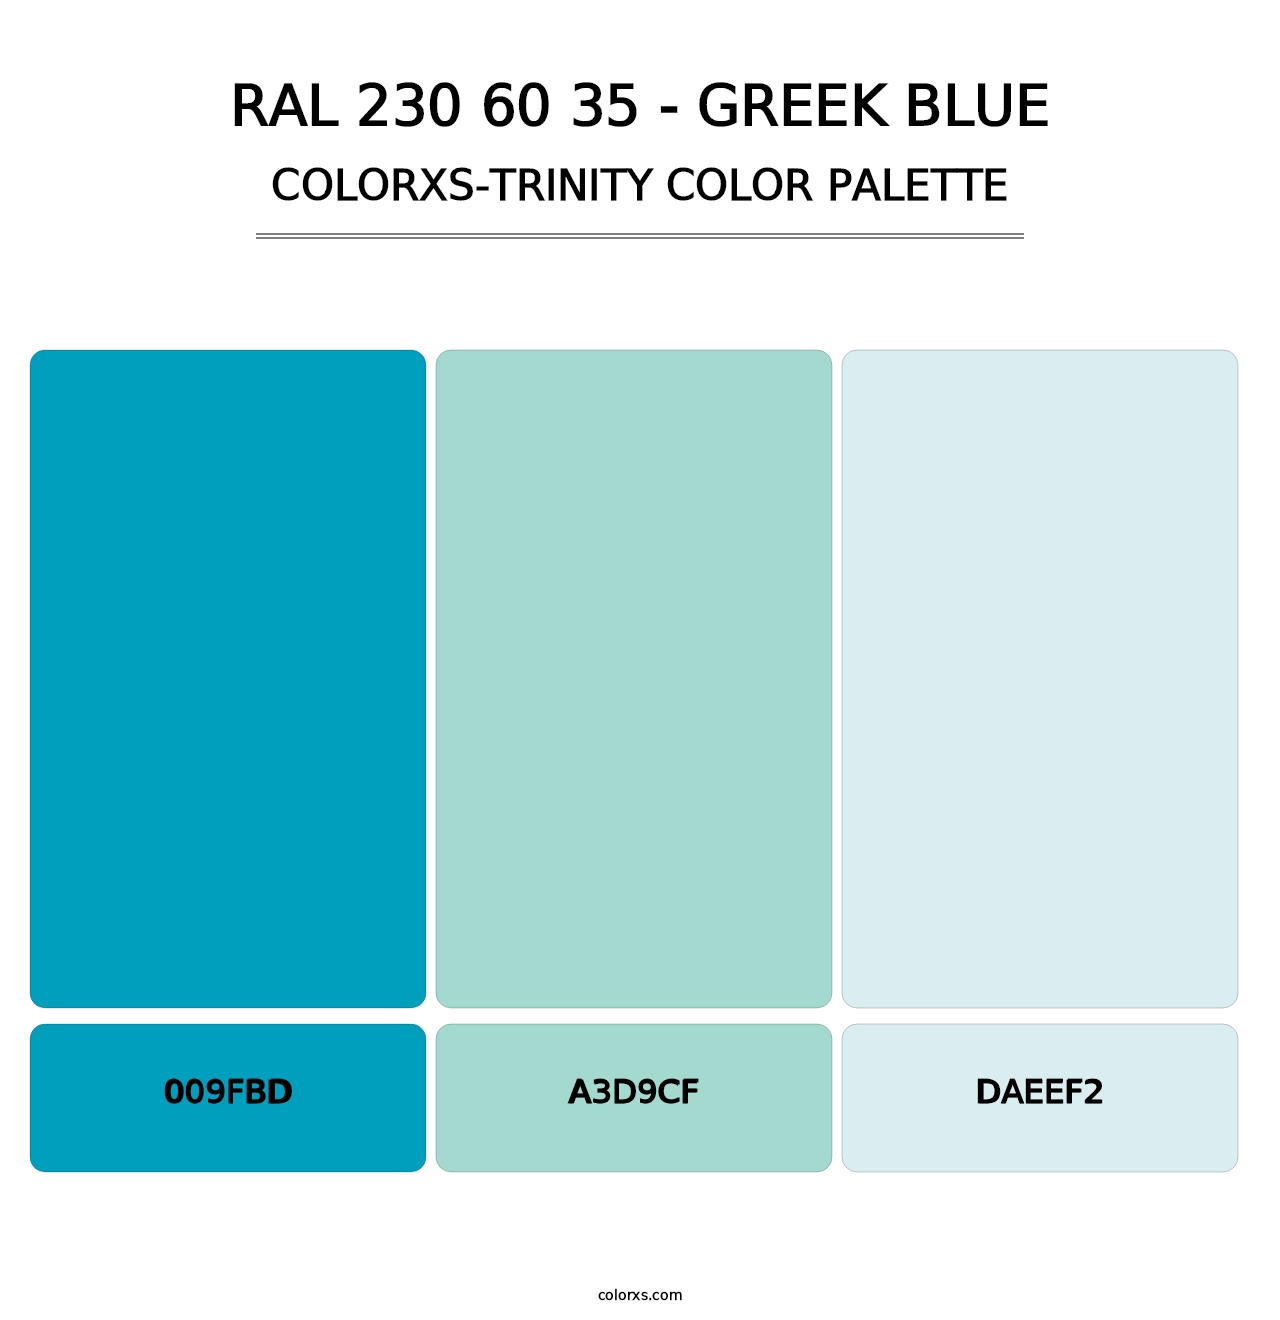 RAL 230 60 35 - Greek Blue - Colorxs Trinity Palette